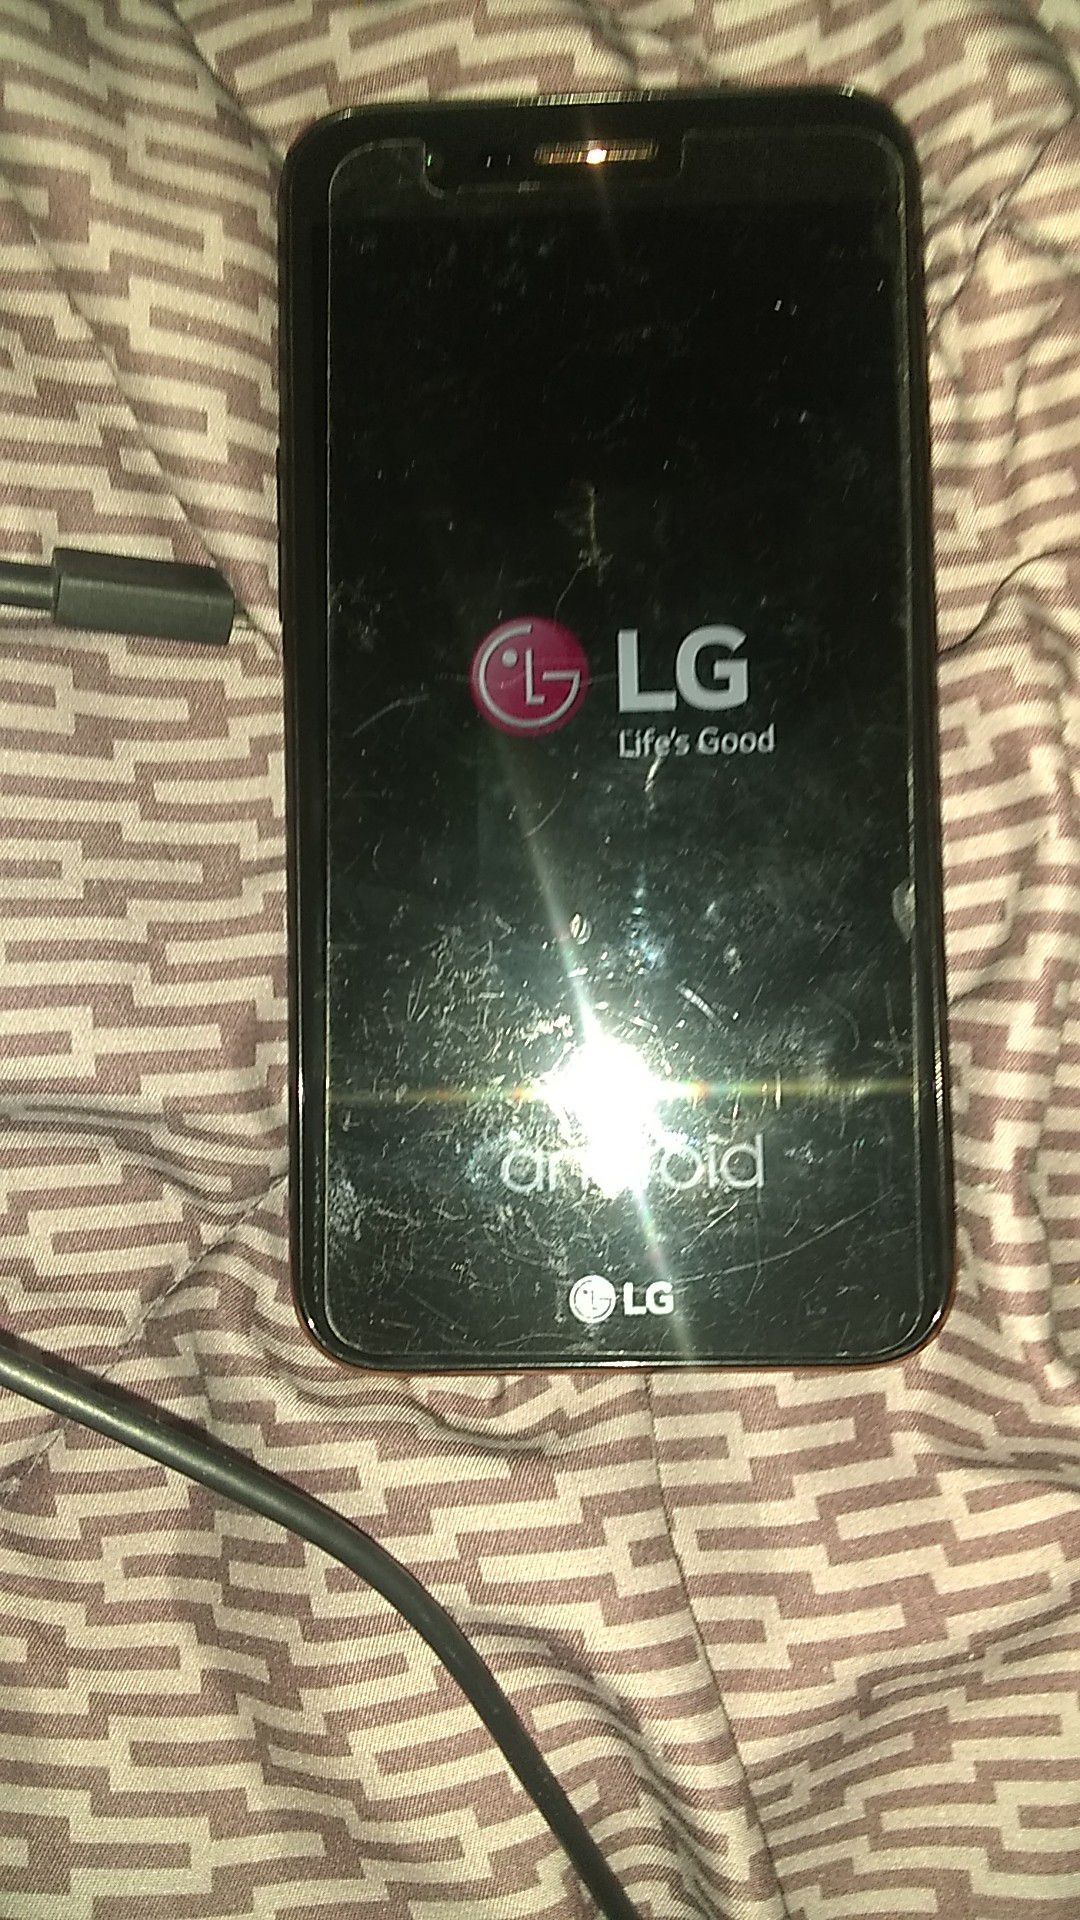 Locked LG cell phone